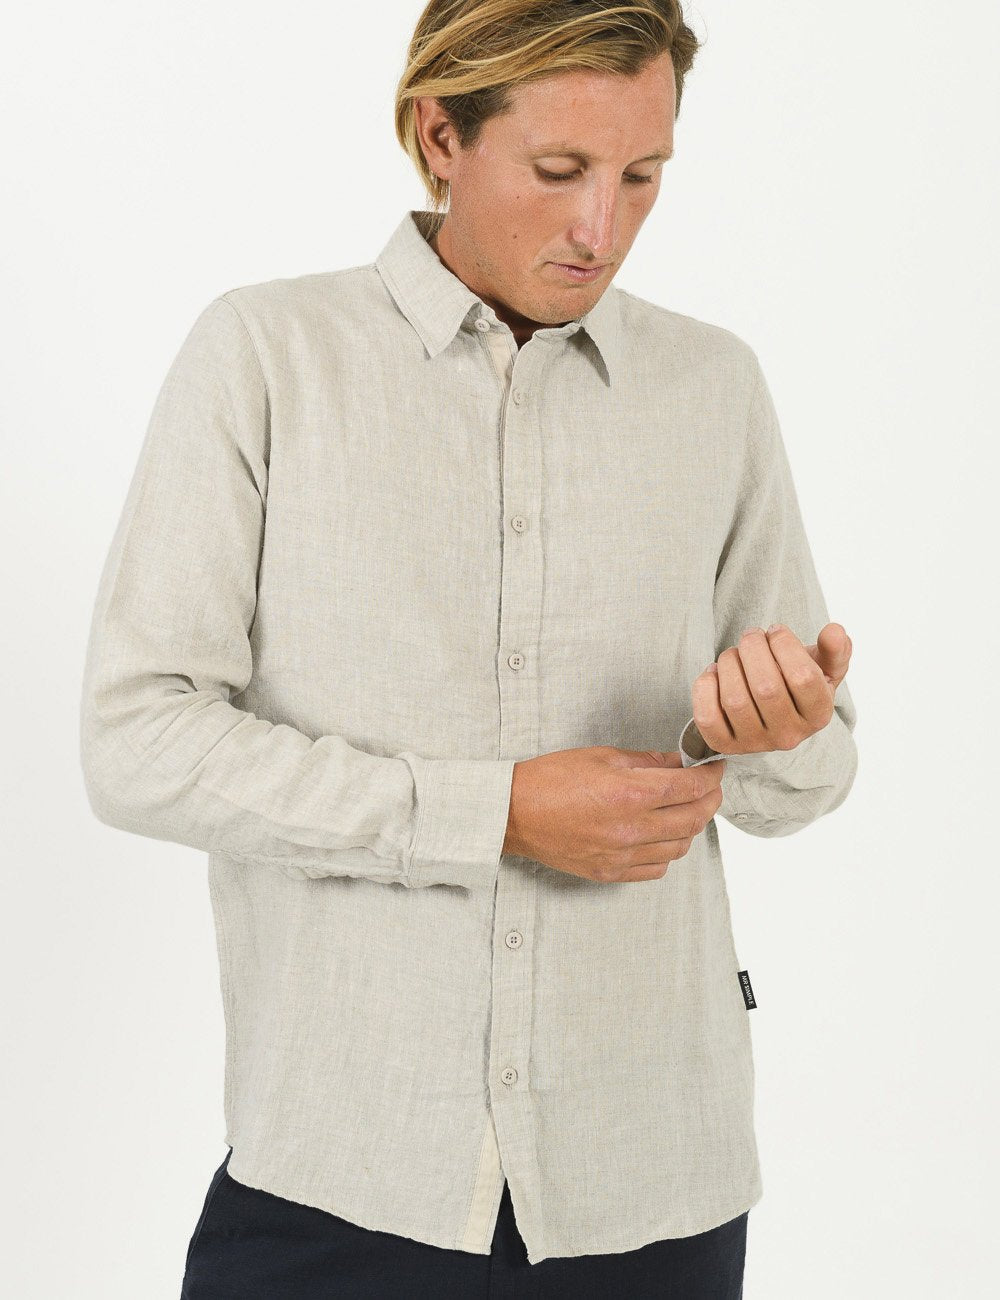 Mr Simple - Linen LS Shirt - Natural